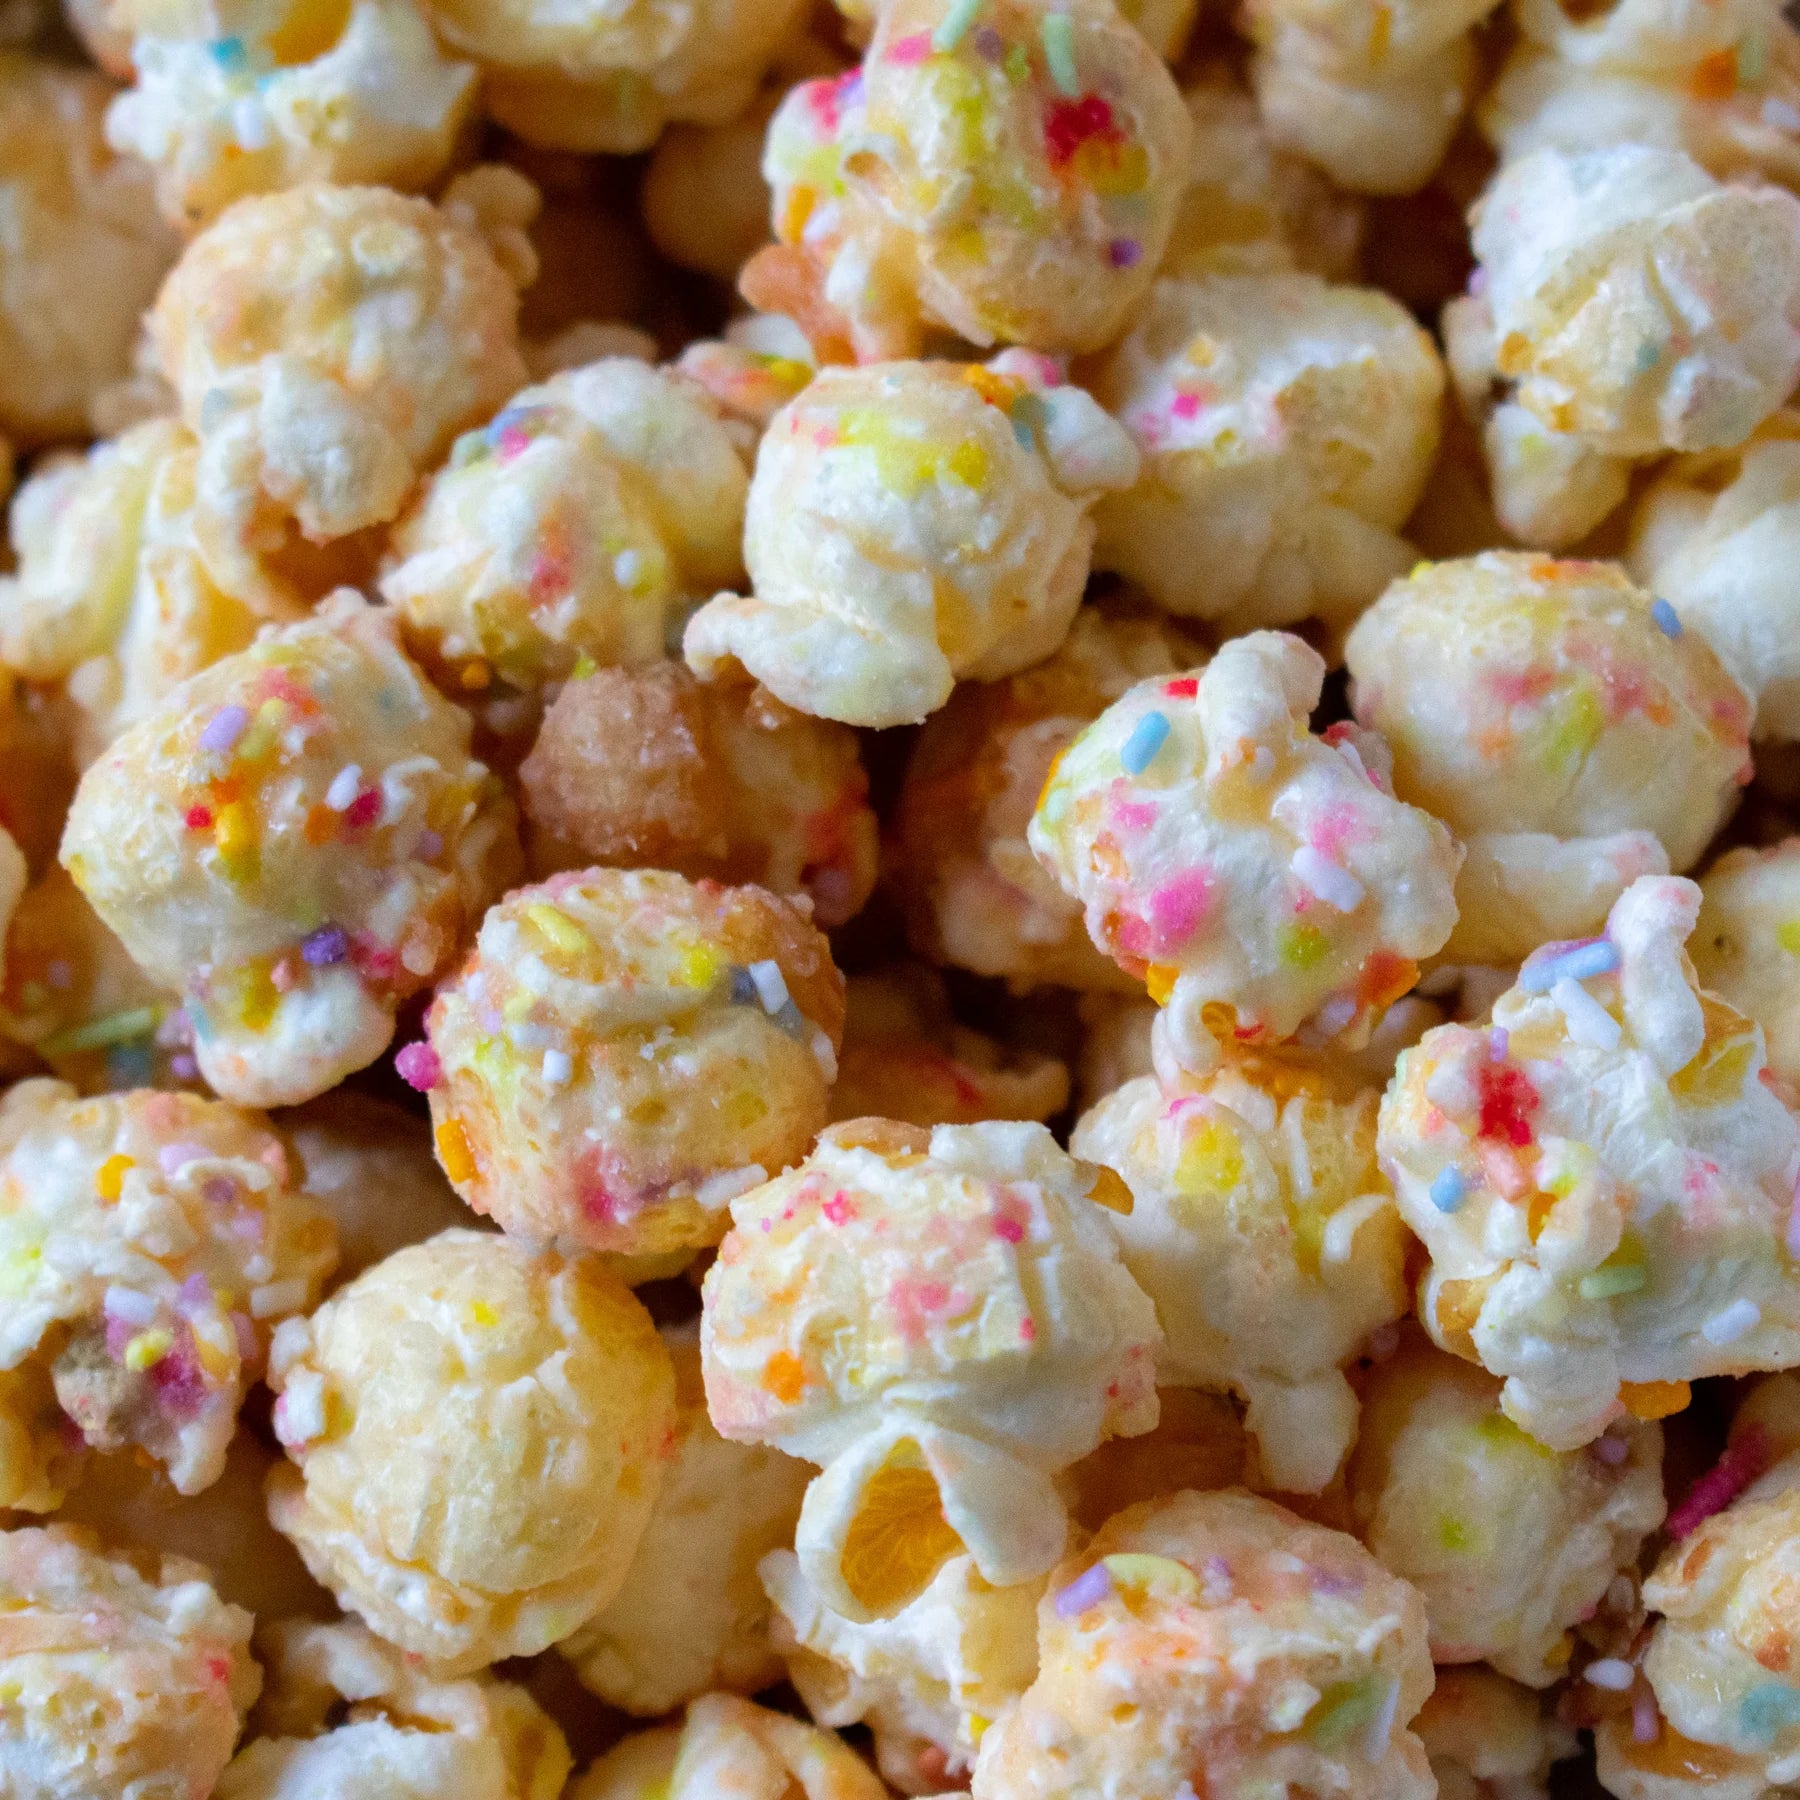 Popcorn Shed | Birthday cake